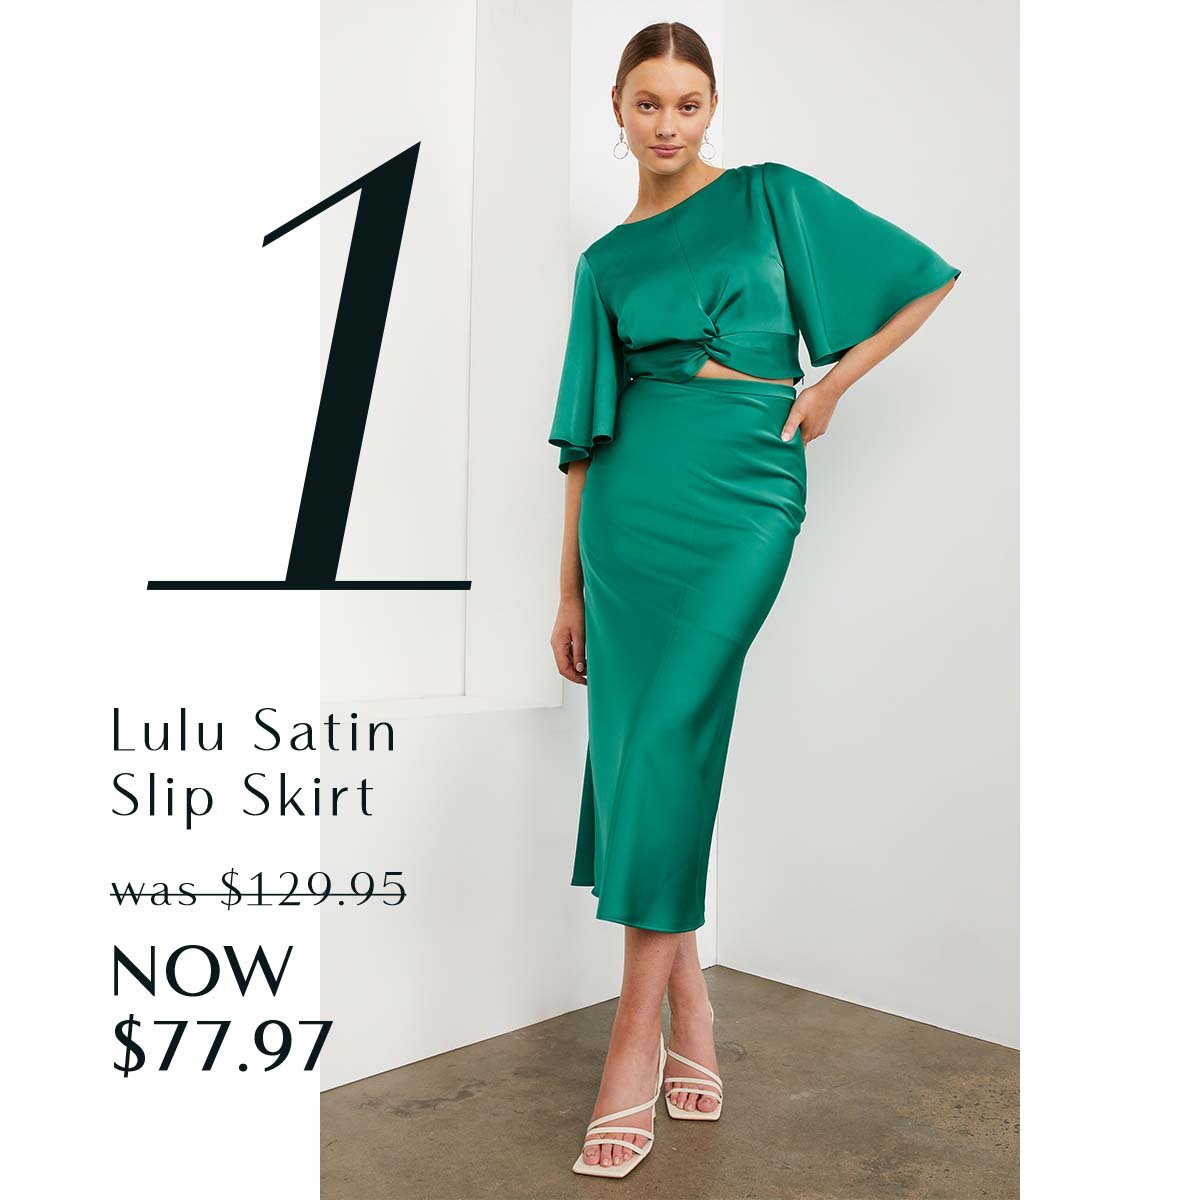 2. Lulu Satin Slip Skirt  was $129.95 NOW $77.97